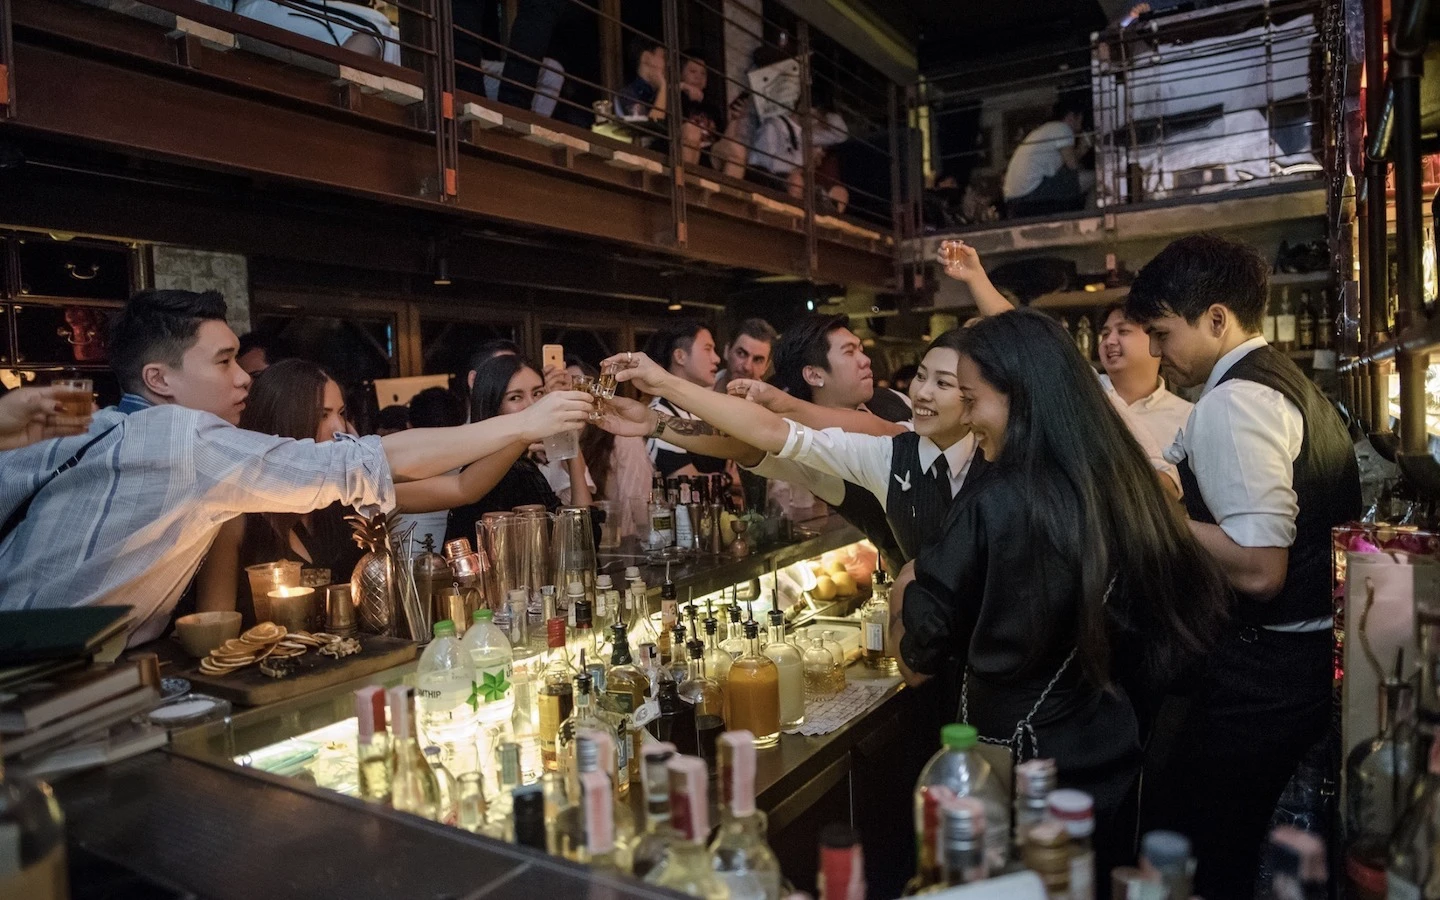 bartenders sharing shots of alcohol with clients at Rabbit hole bar in Bangkok